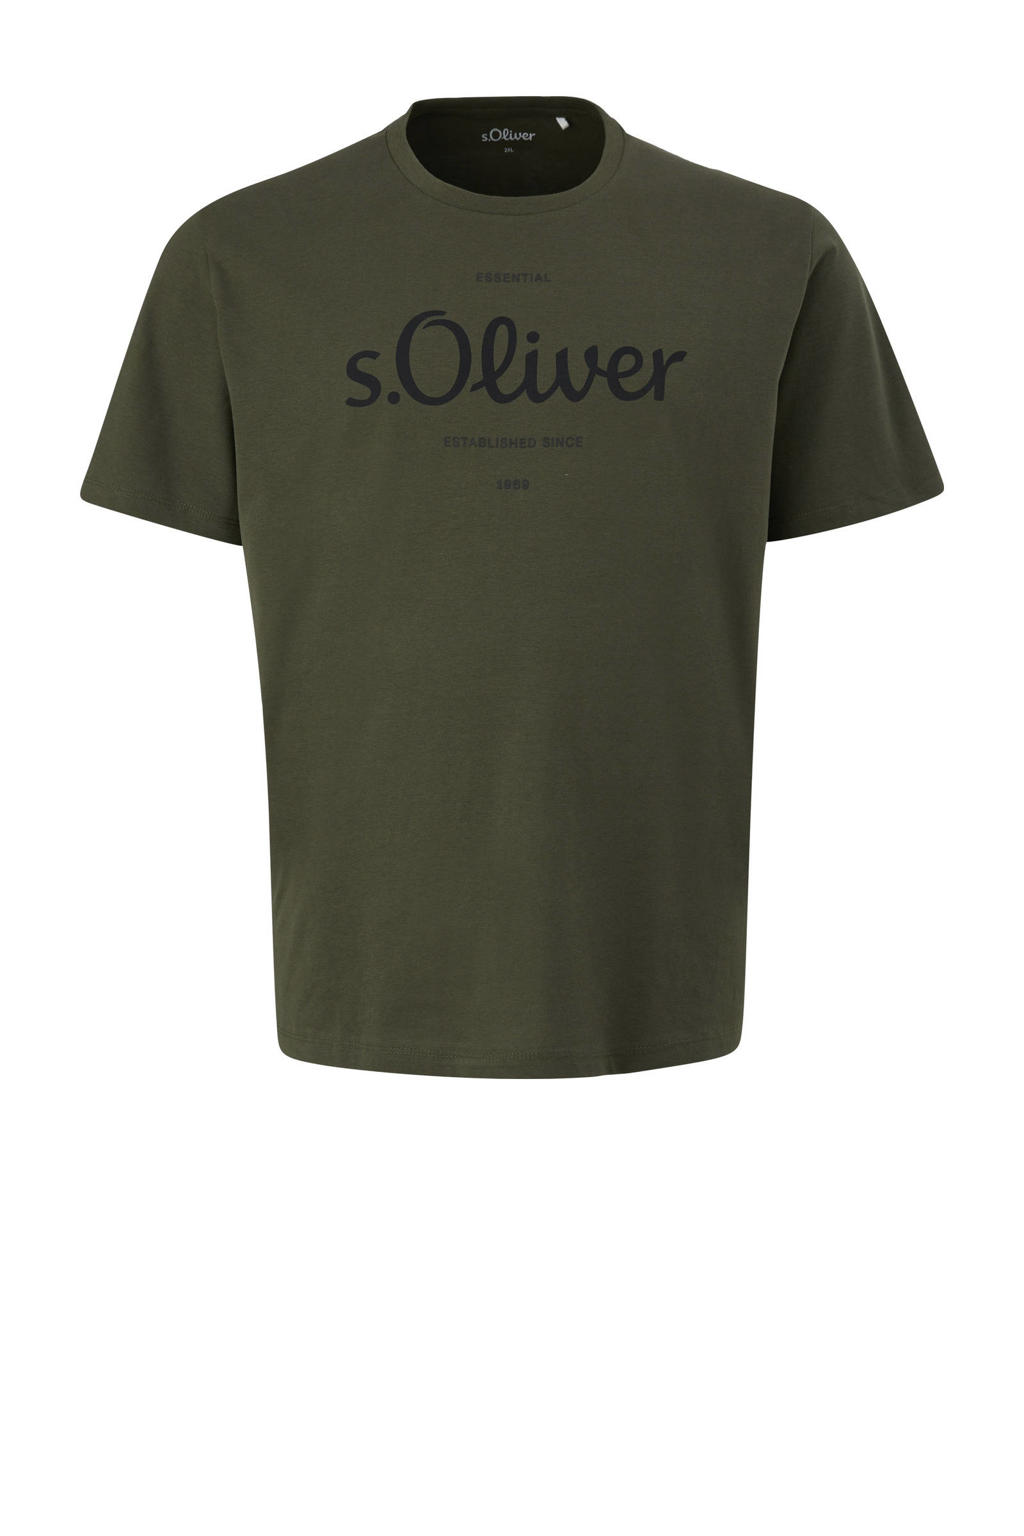 s.Oliver Big Size T-shirt Plus Size met logo groen